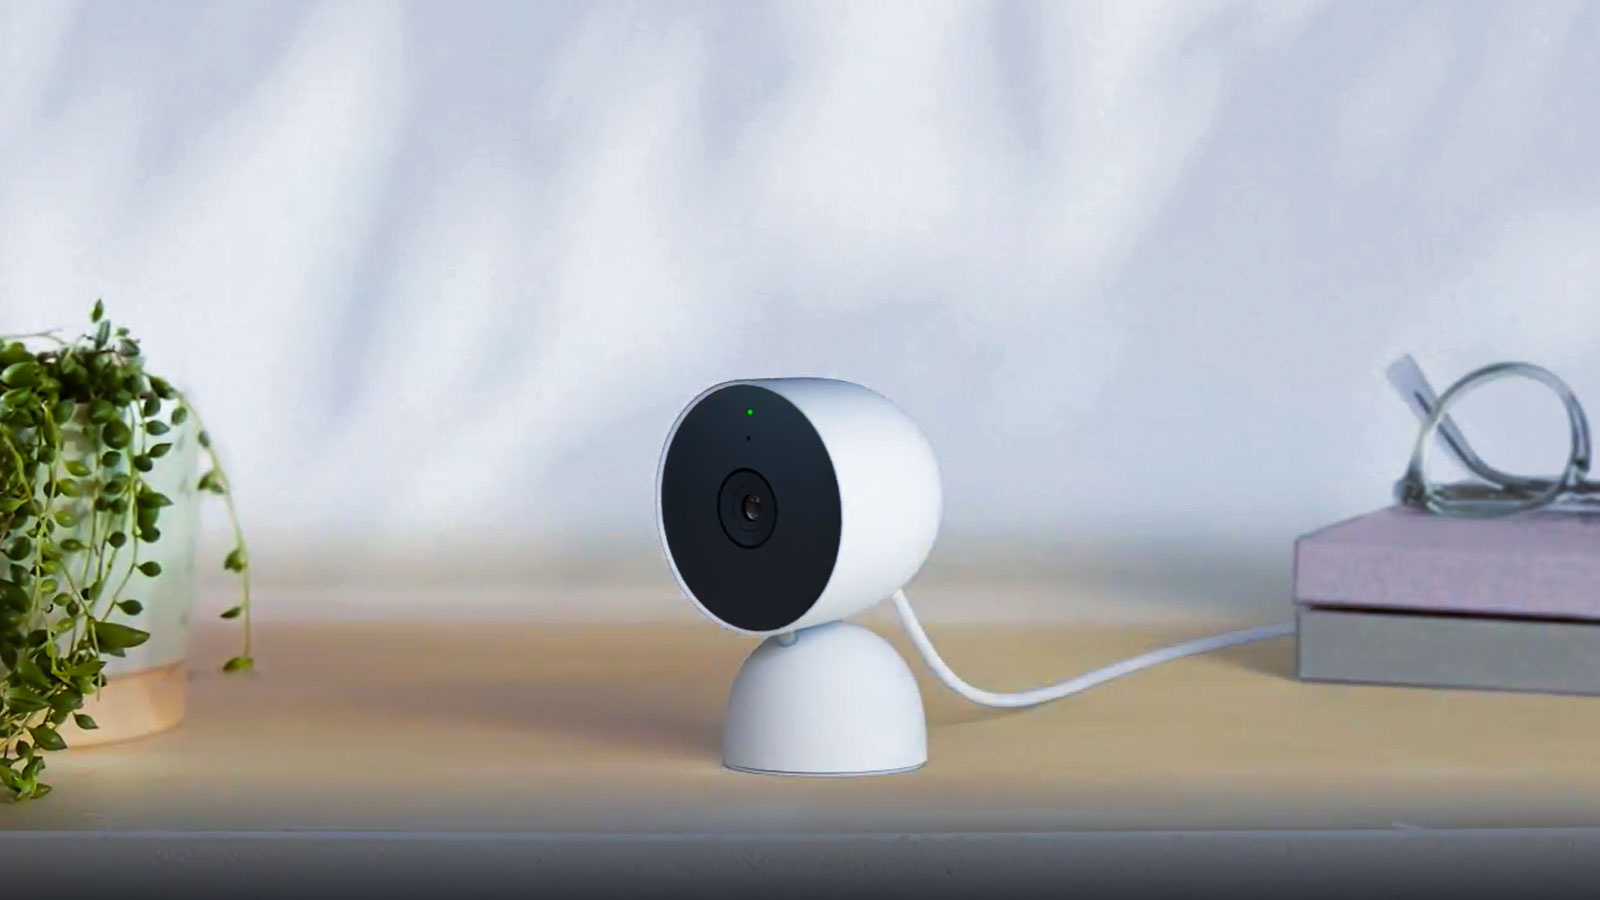 Caméra de surveillance sans fil Bluetooth Google Nest Cam